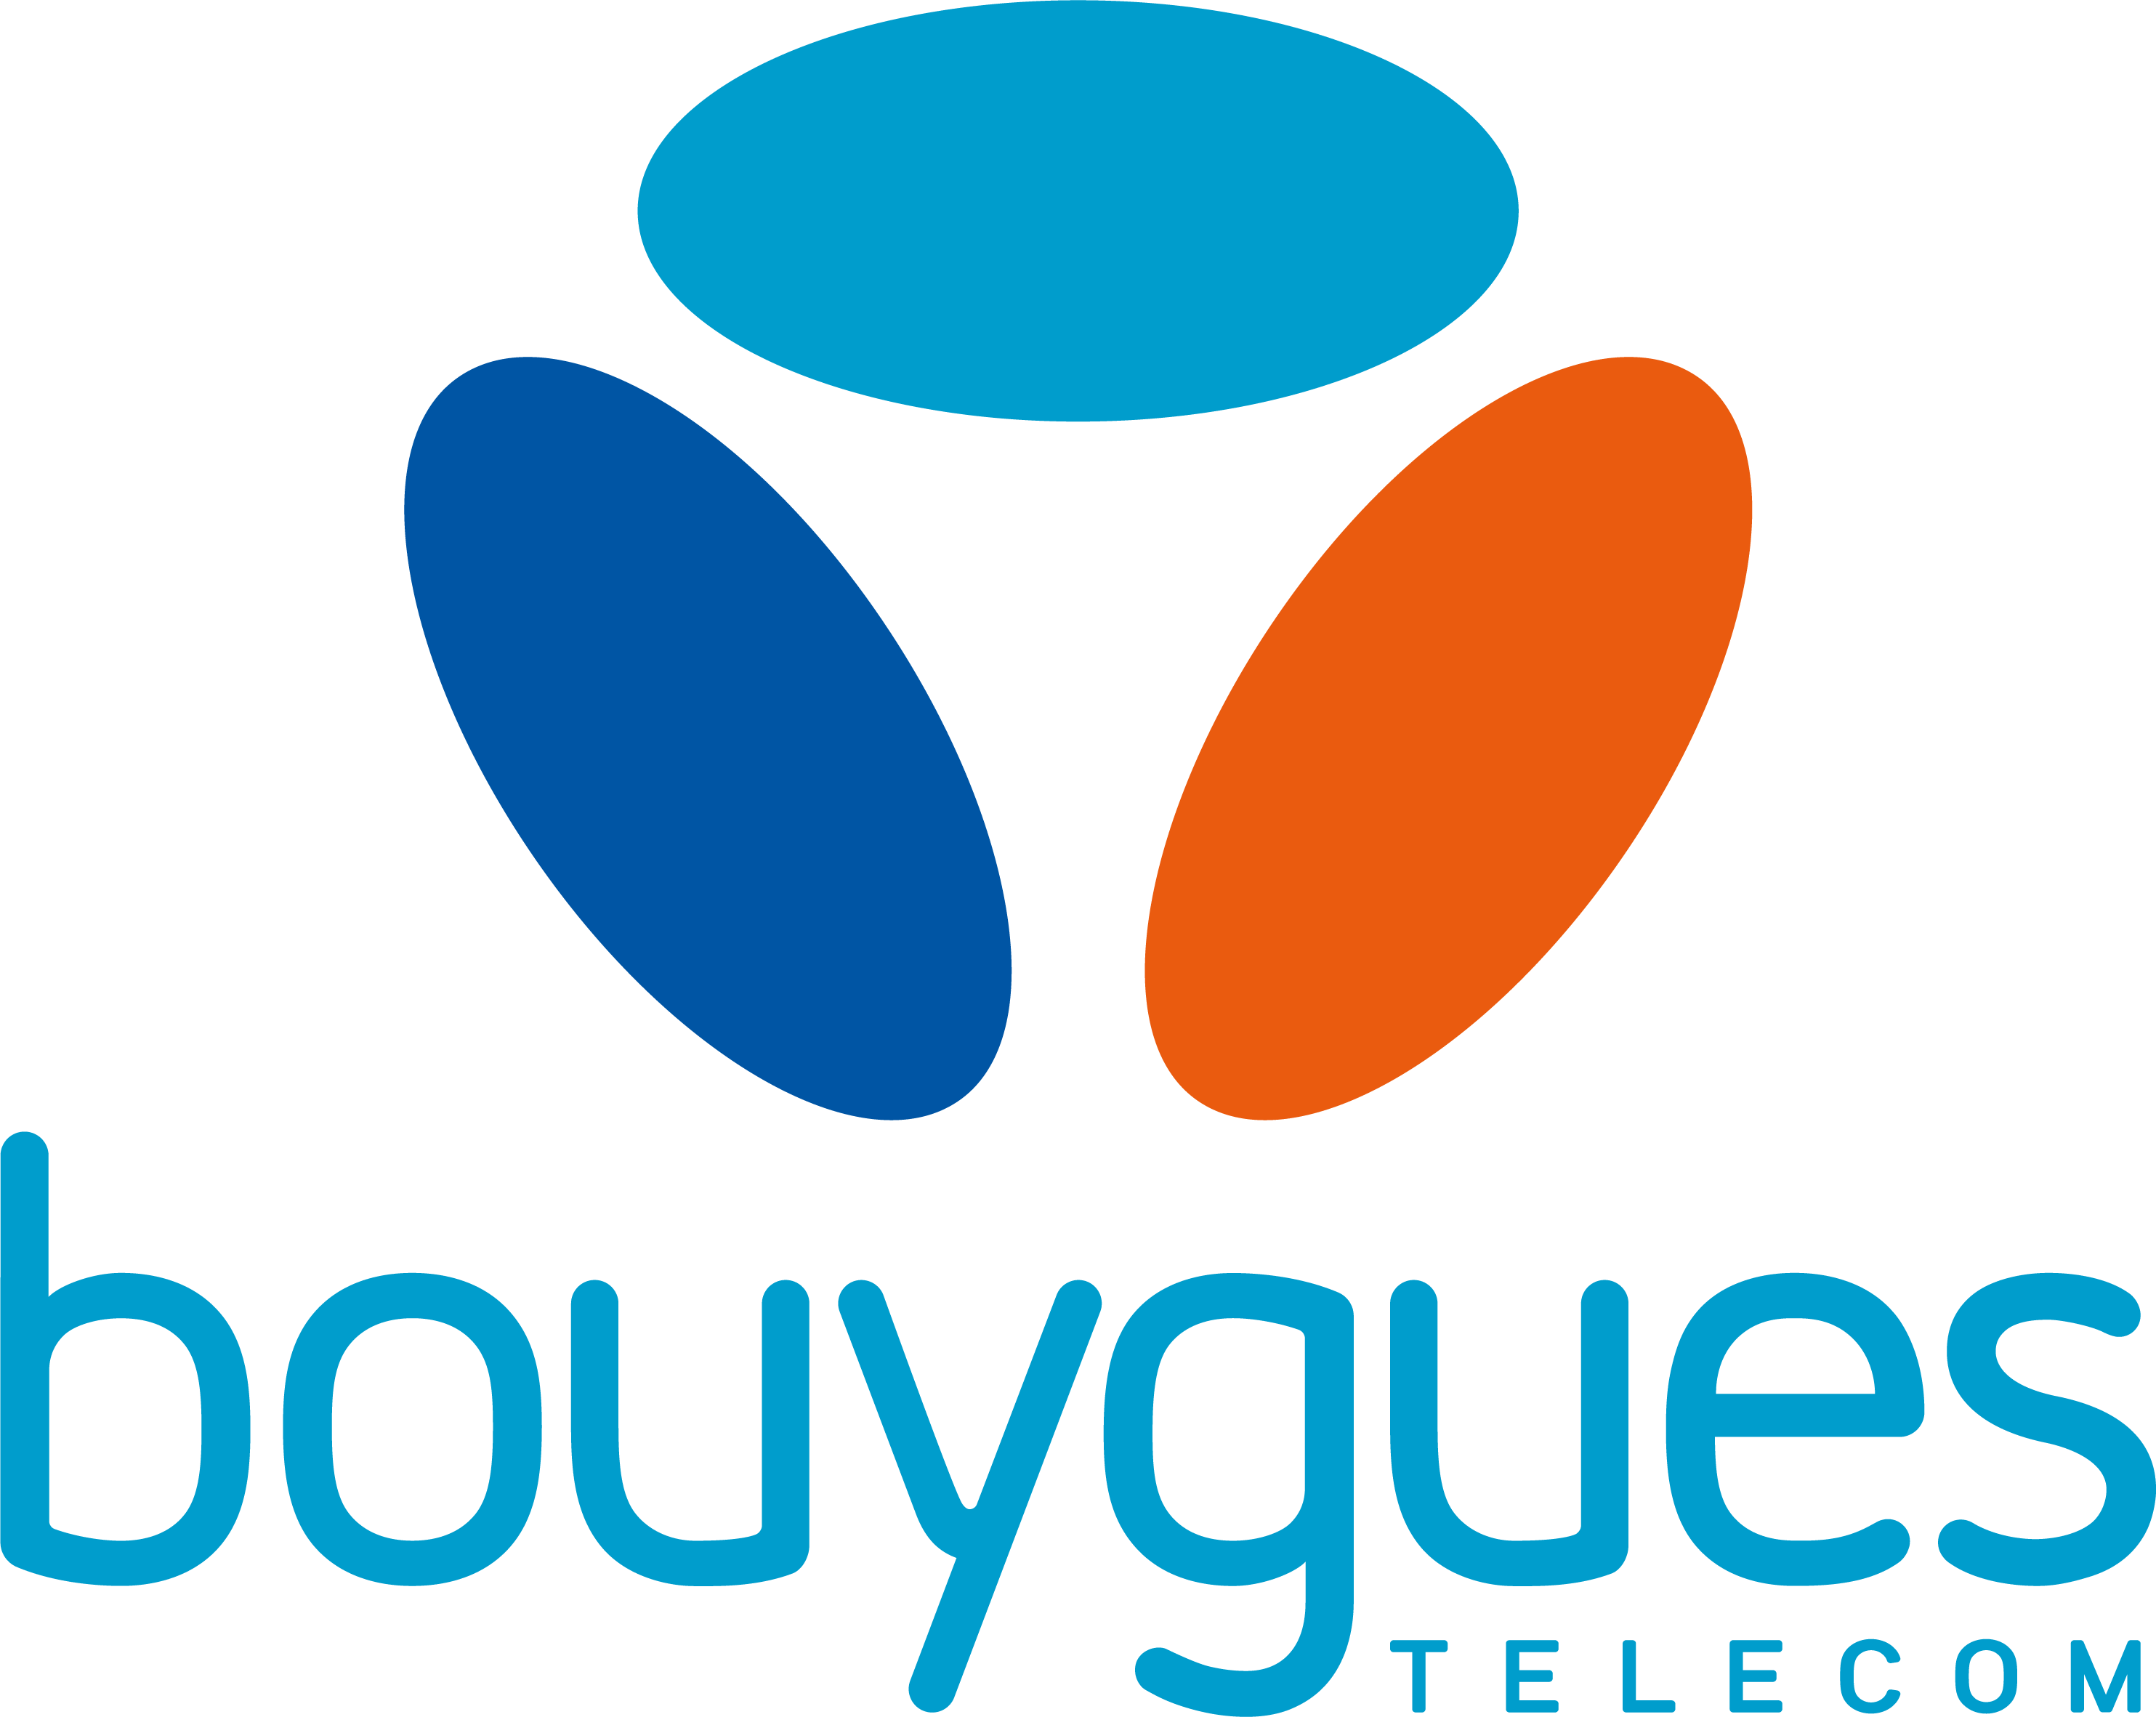 Bouygues Telecom eSim, Best eSIM Providers and The Best eSIM for International Travel